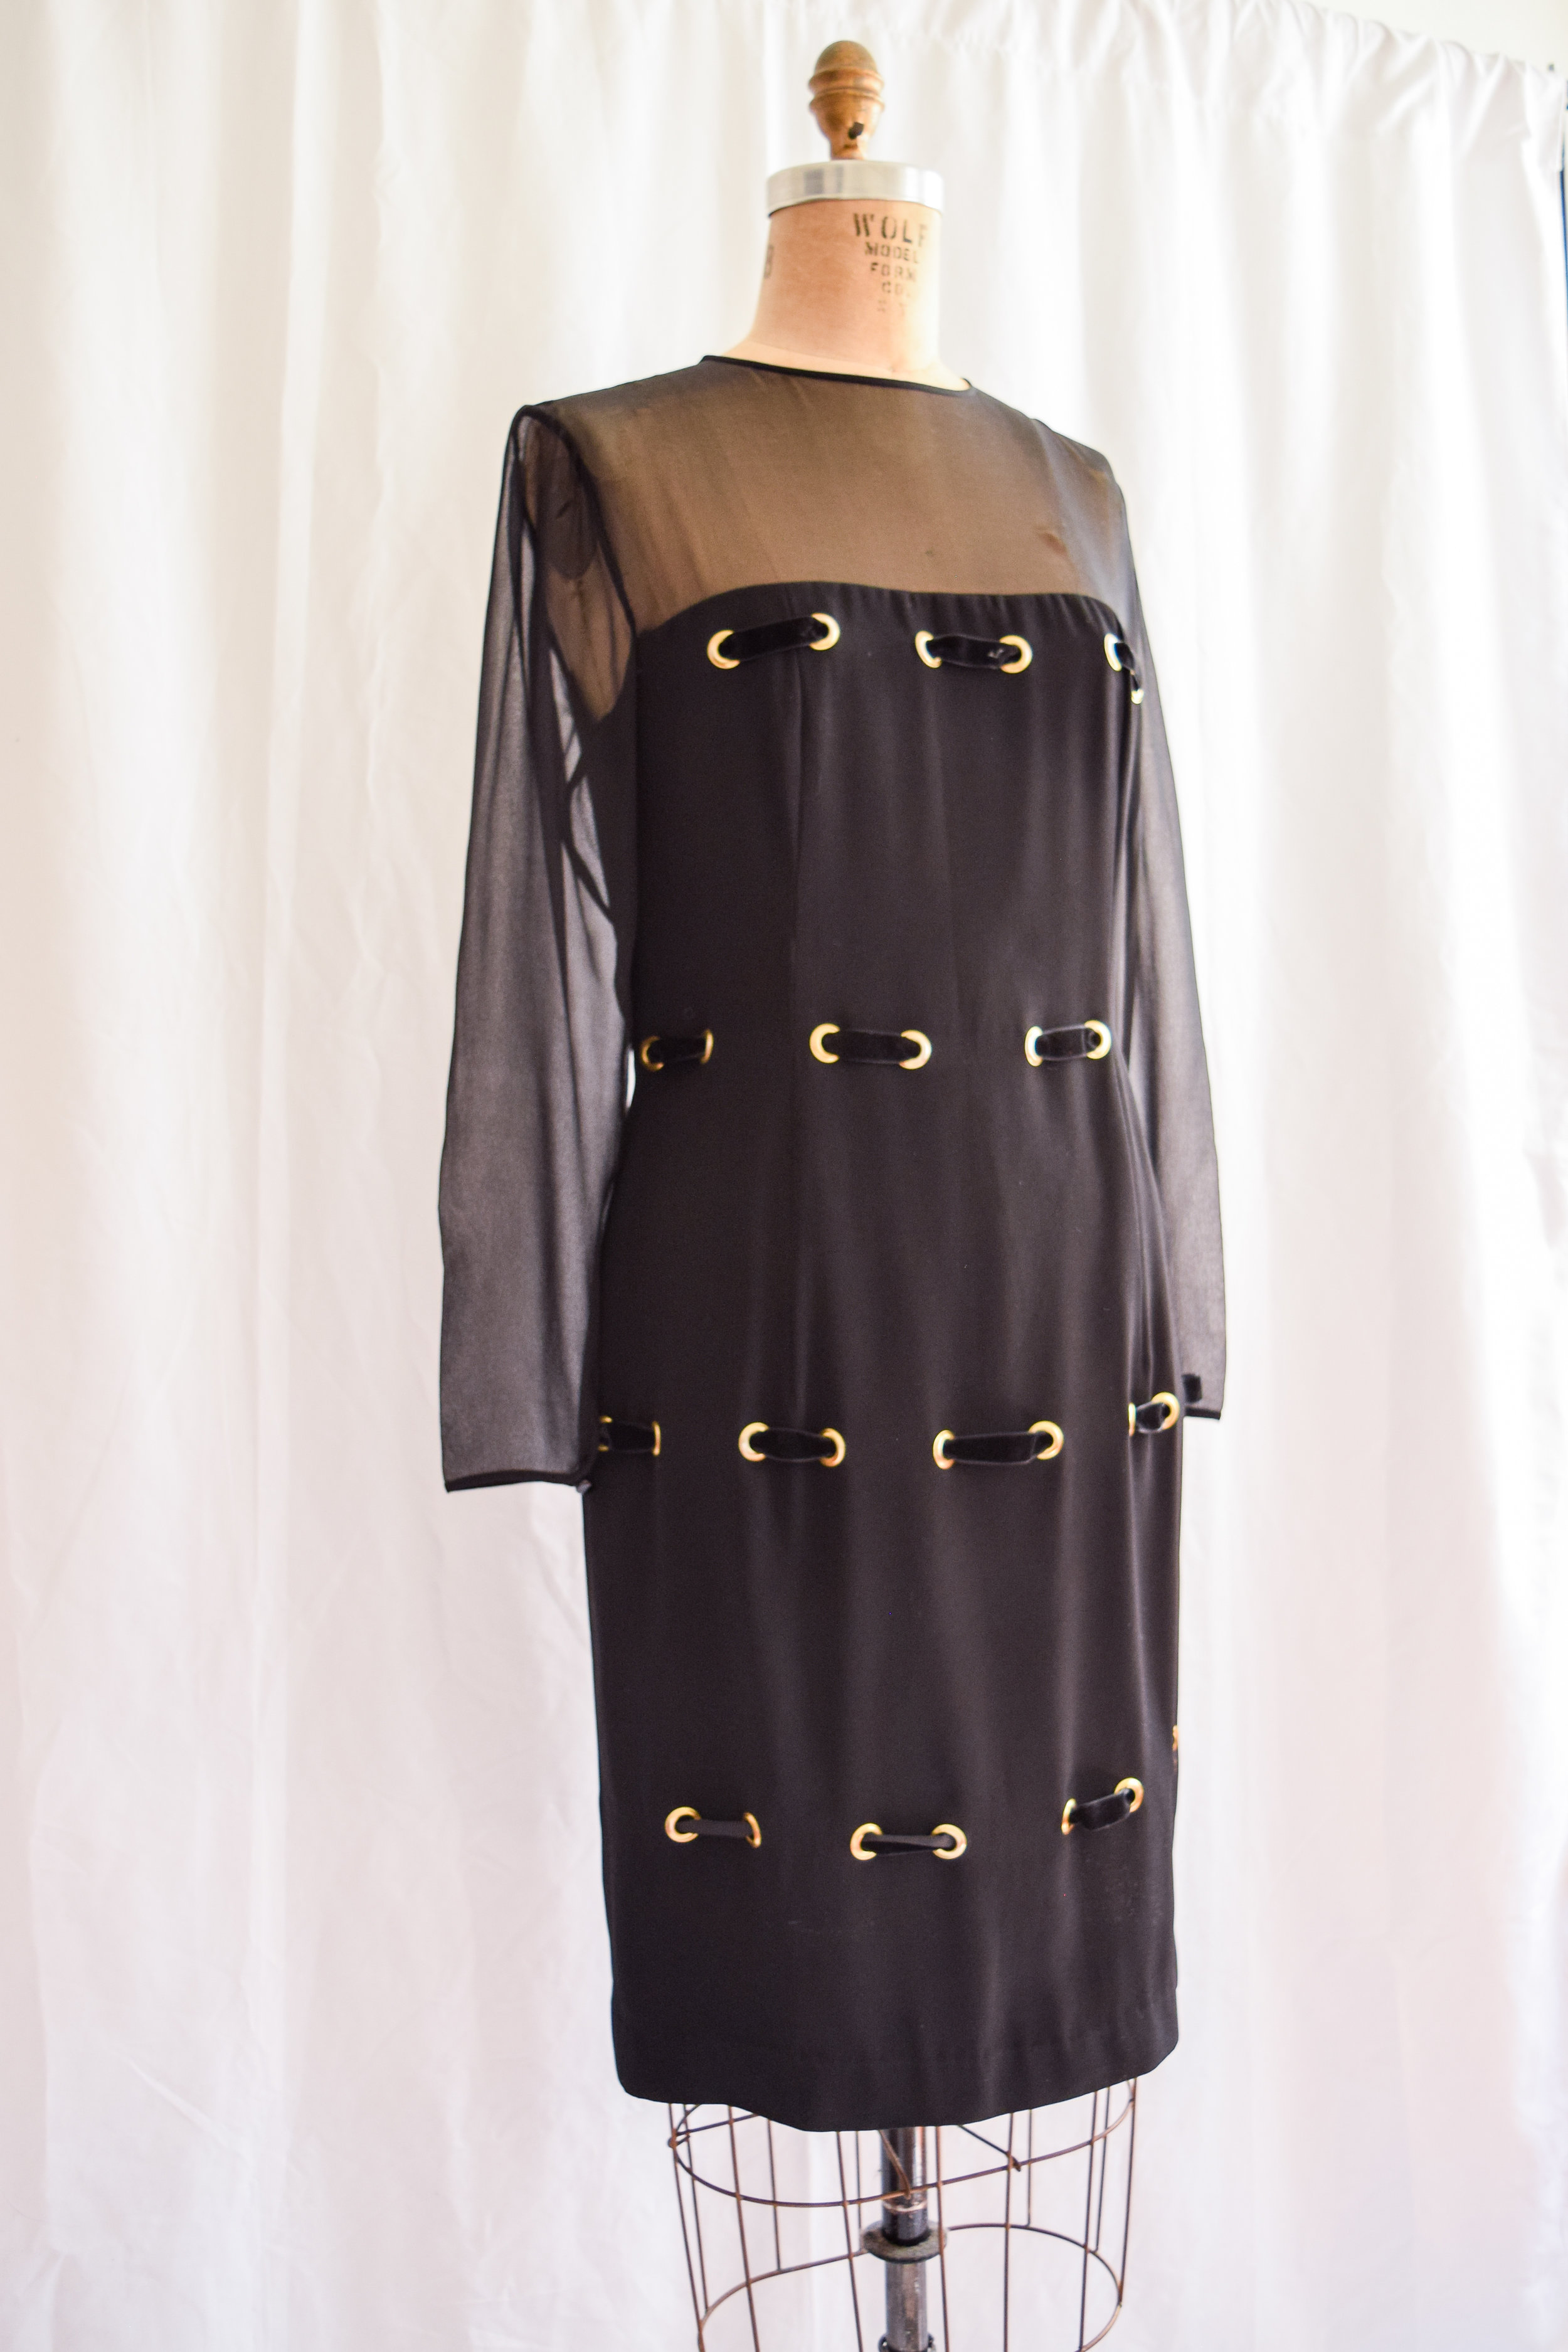 Bellville Sassoon Lorcan Mullany. Vintage 1990's Black Crepe / Chiffon  Dress with Velvet Ribbons — Bobbins & Bombshells